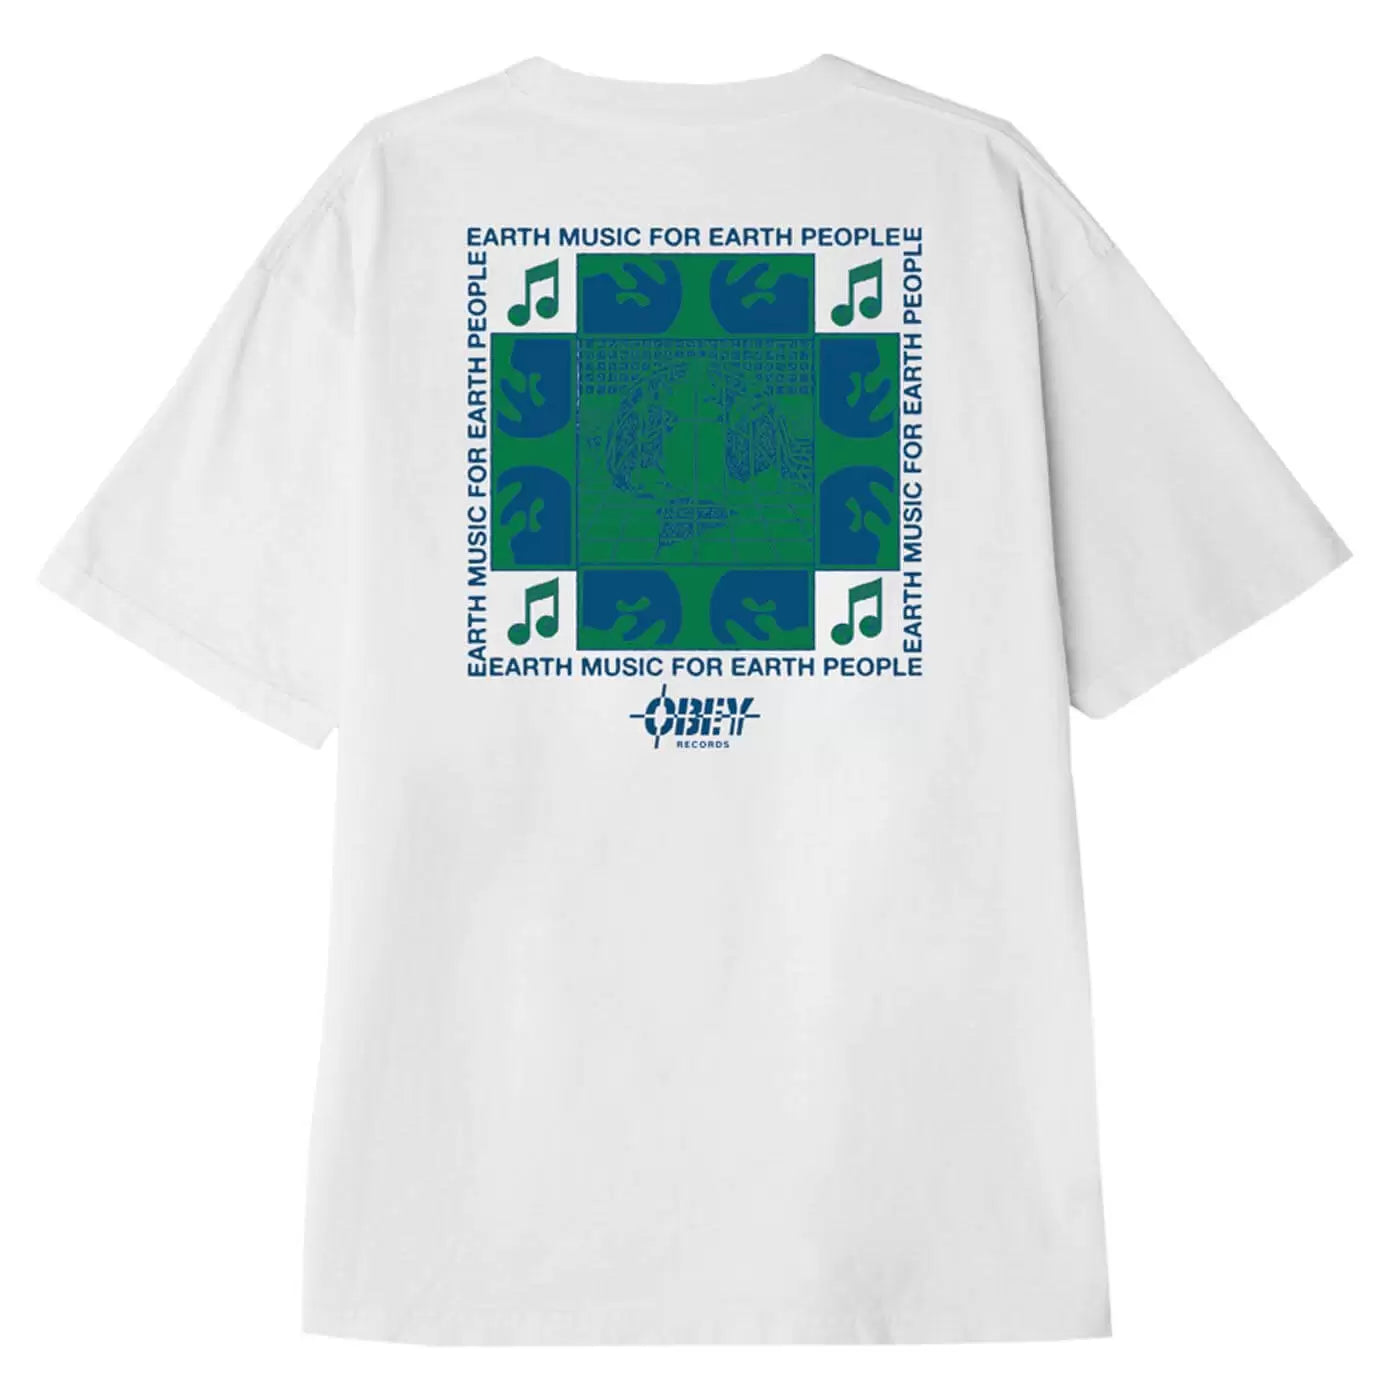 S/S Earth Music T-shirt (White)